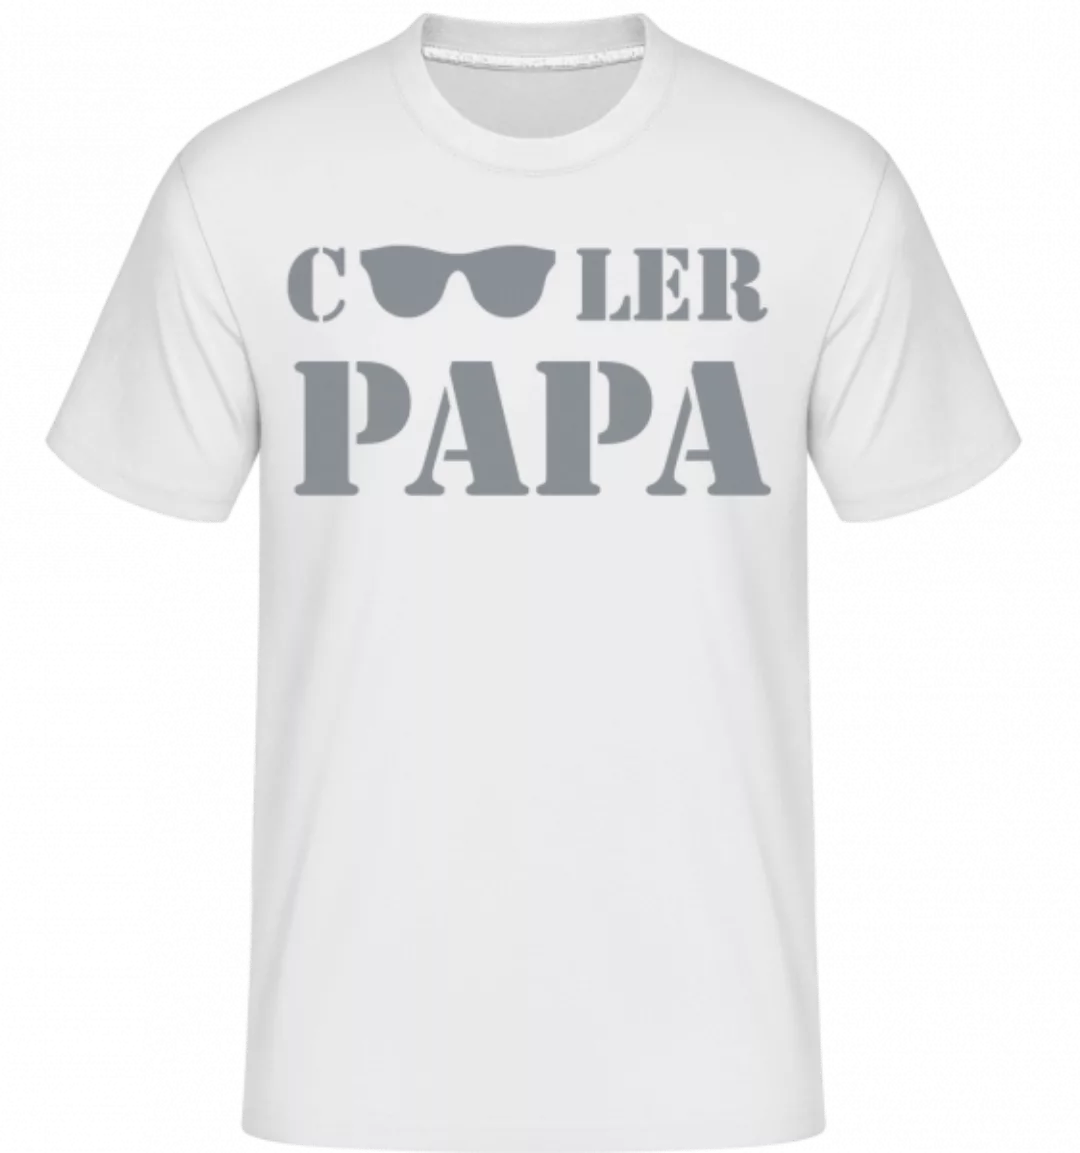 Cooler Papa - Sonnenbrille · Shirtinator Männer T-Shirt günstig online kaufen